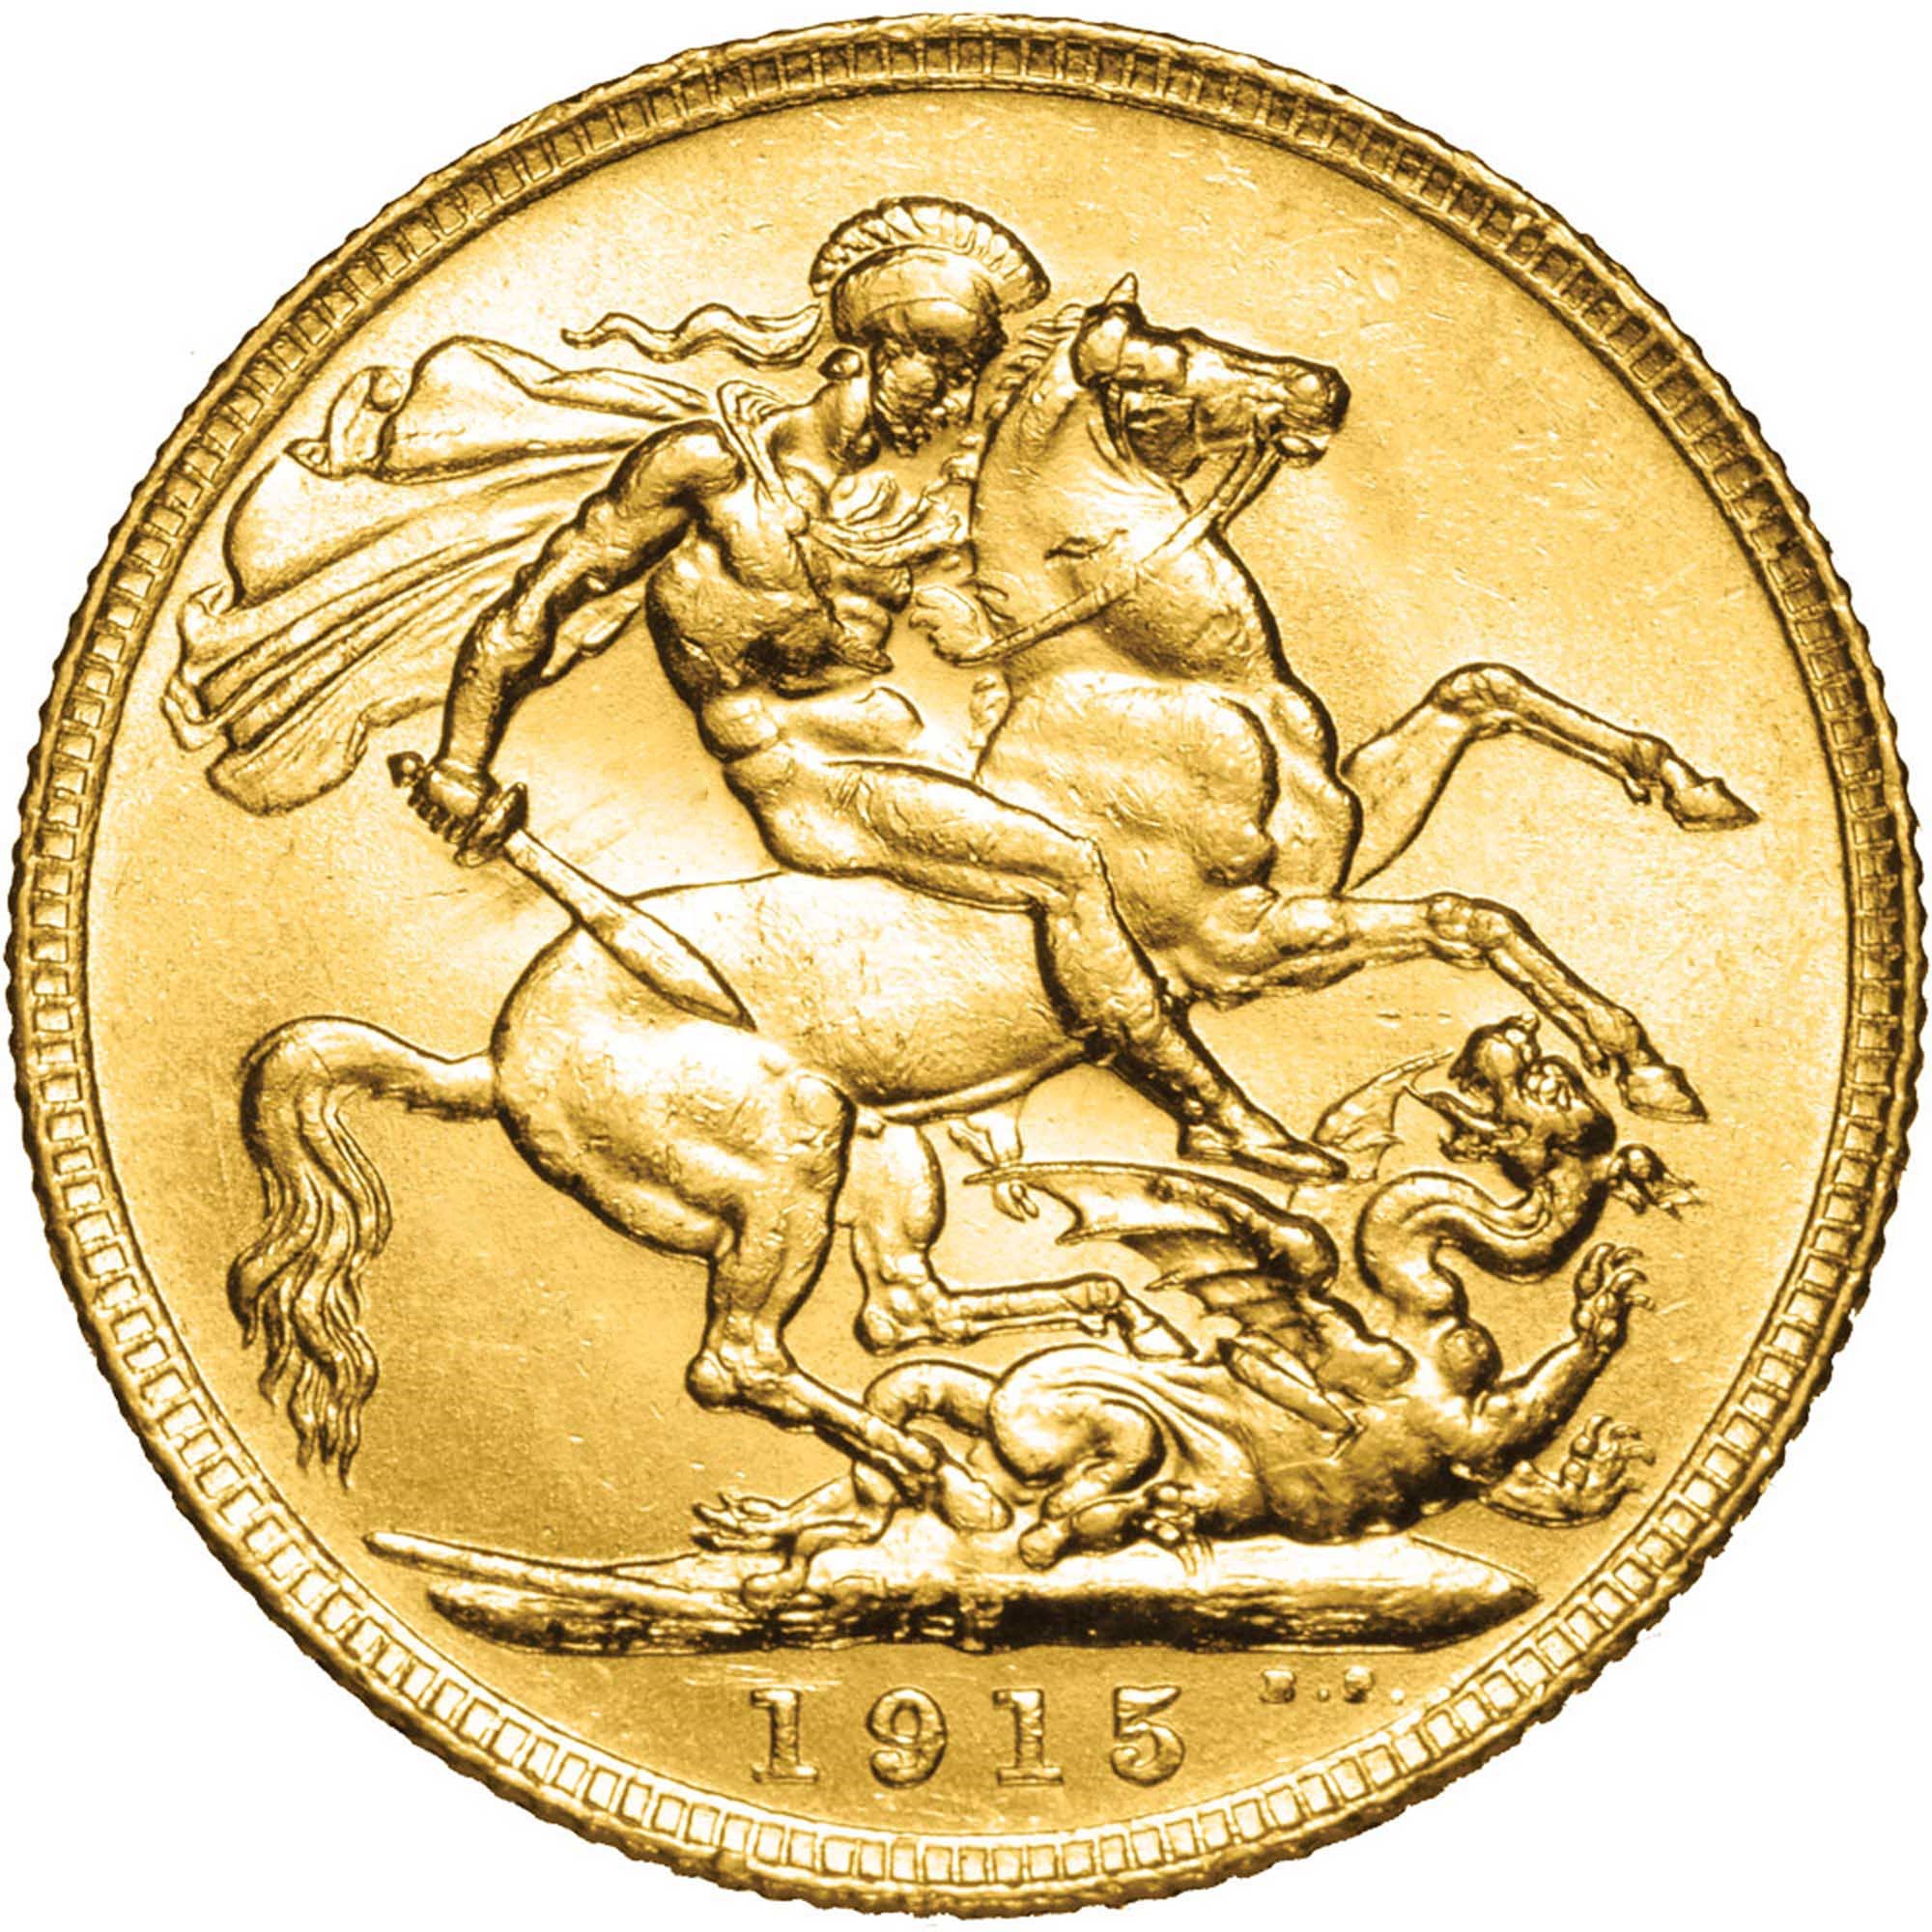 2022 1 oz Gold Britannia .9999 Gold Coin BU